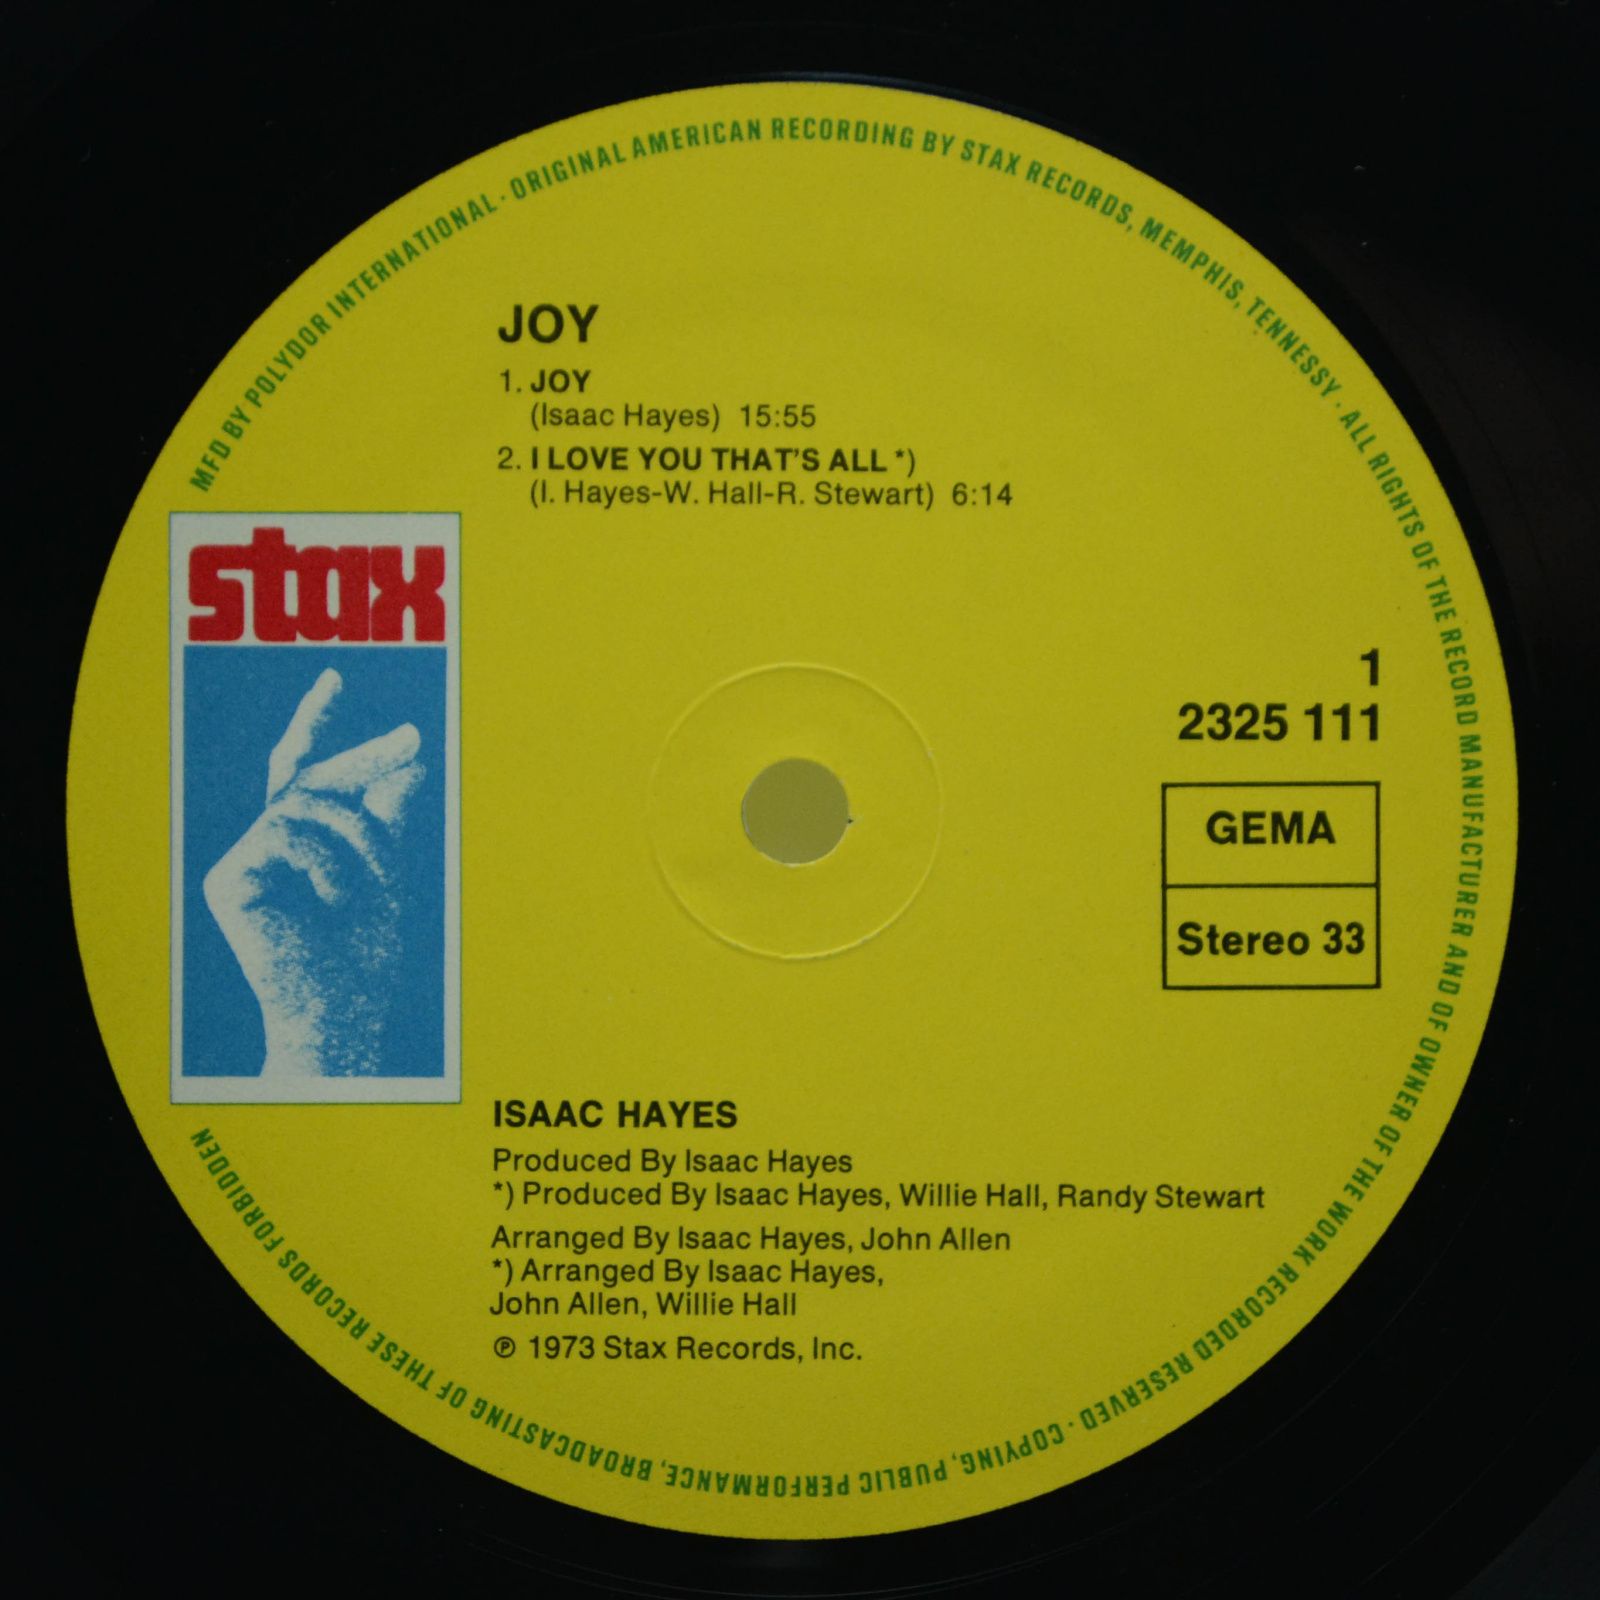 Isaac Hayes — Joy, 1973